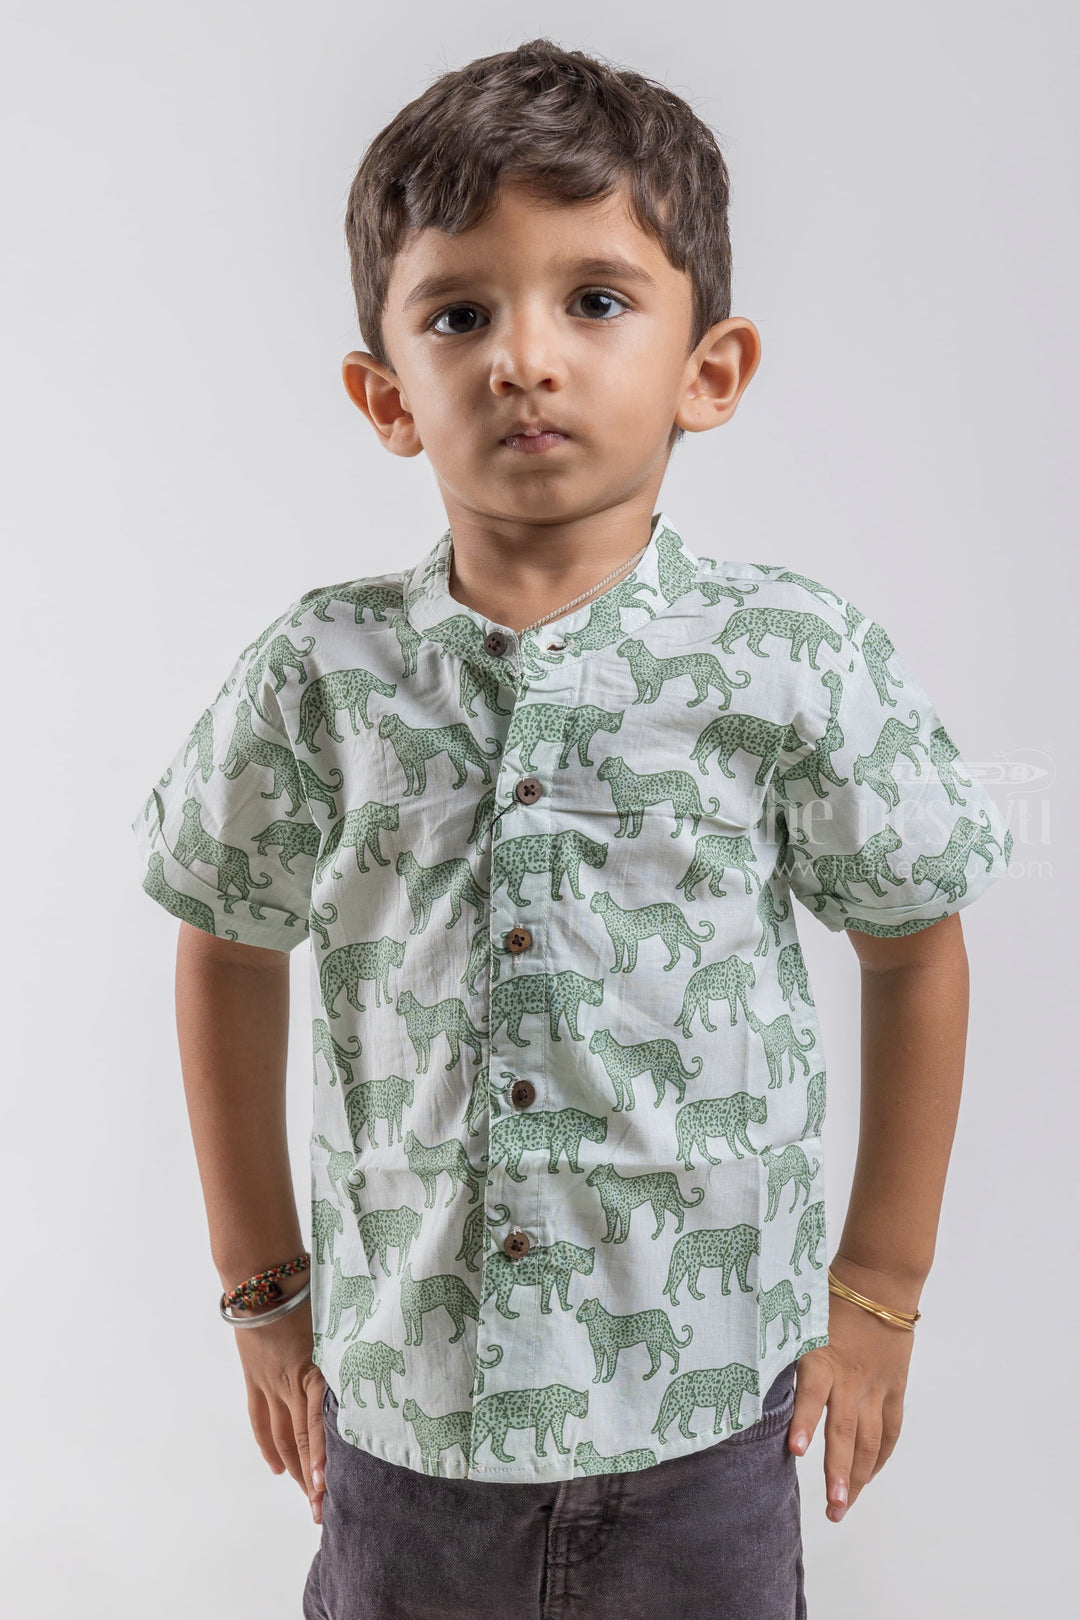 The Nesavu Boys Cotton Shirt Leopard Print Shirt for Boys | Pure Cotton | Nesavu | Exude Confidence and Style psr silks Nesavu 14 (6M) / Green / Cotton BS038B